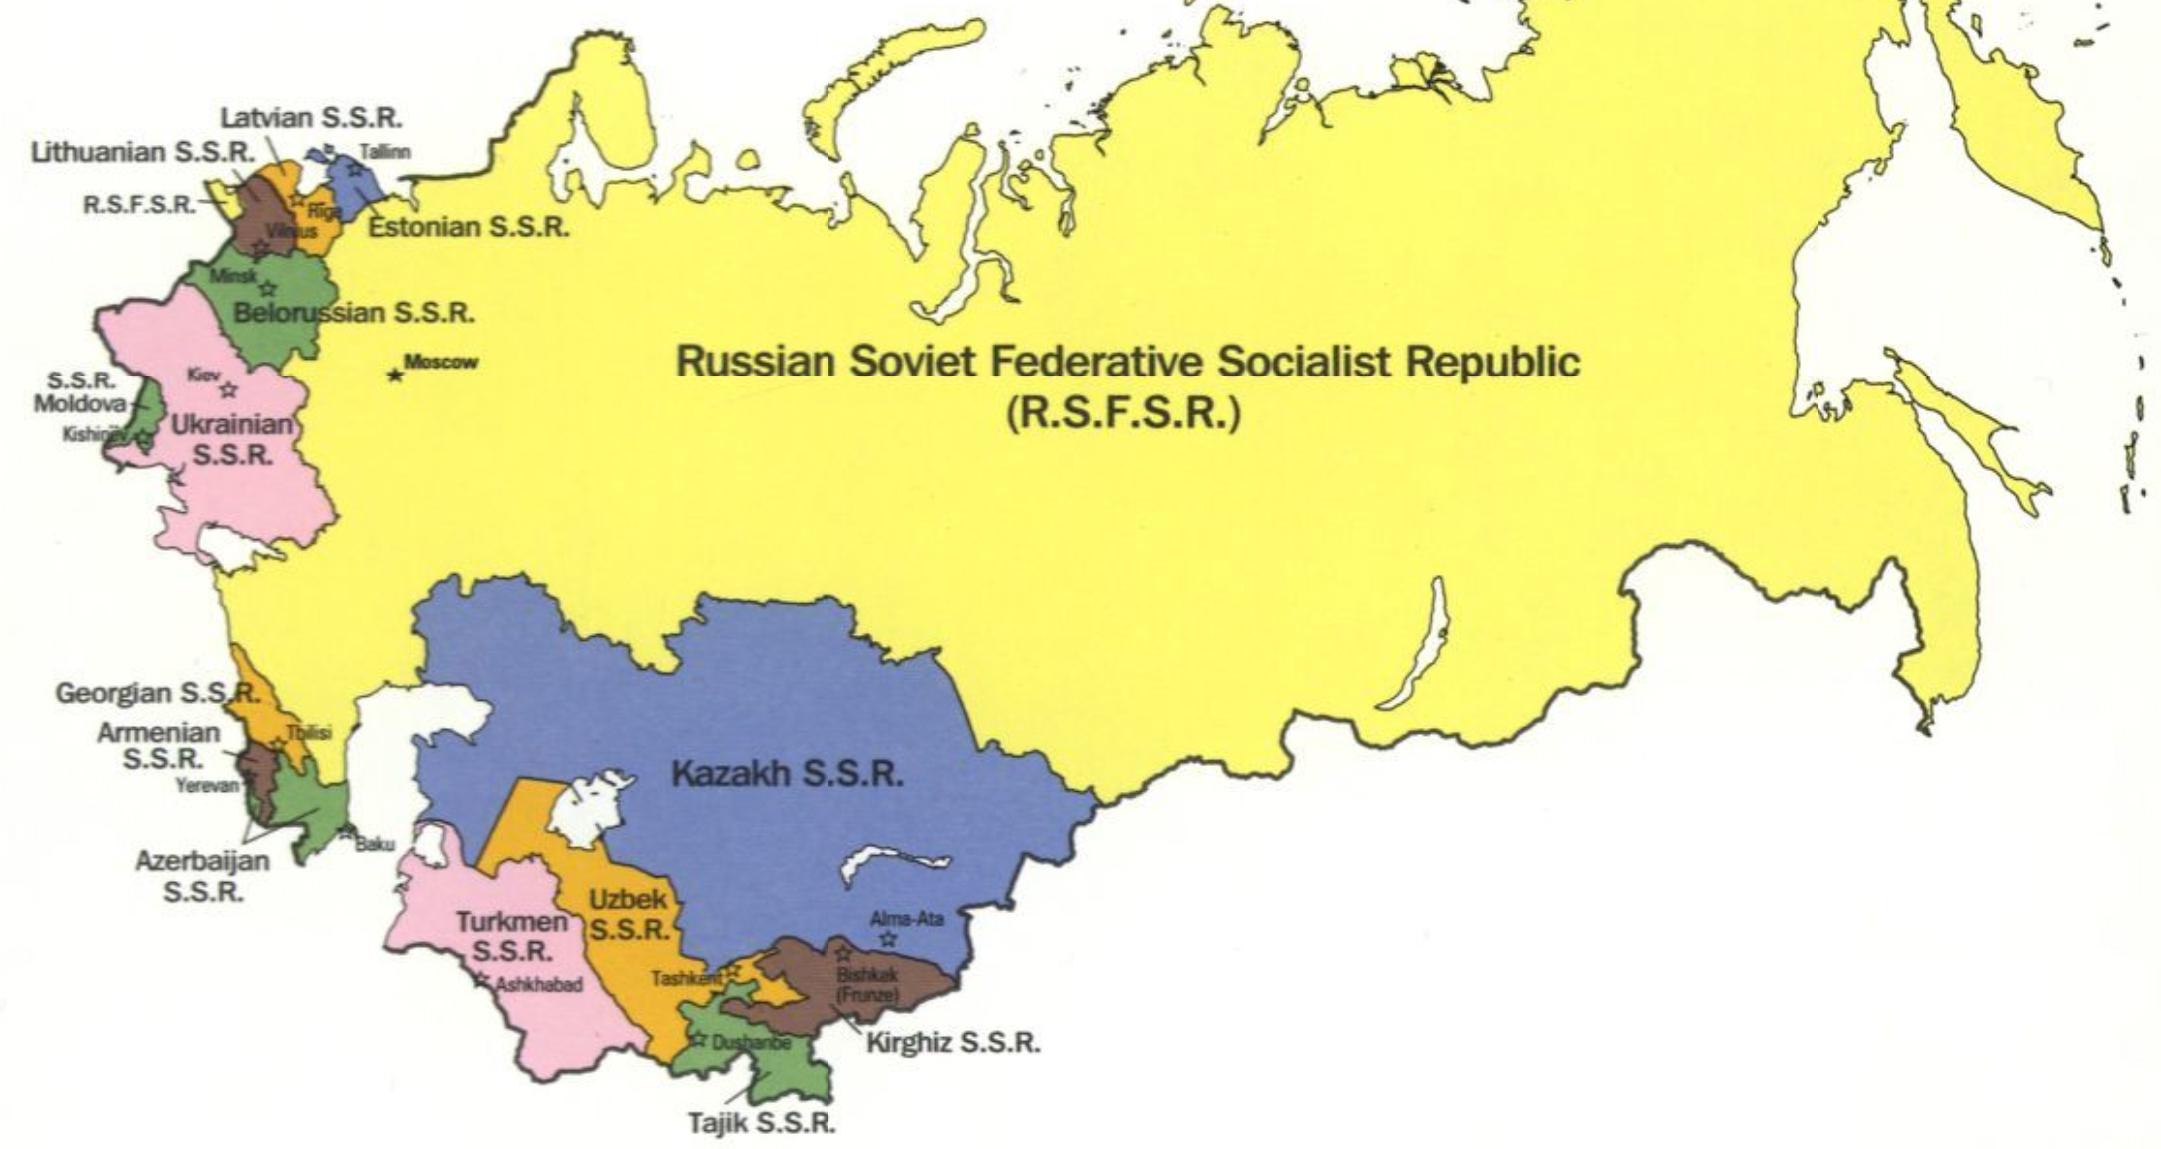 Republics of Soviet Union